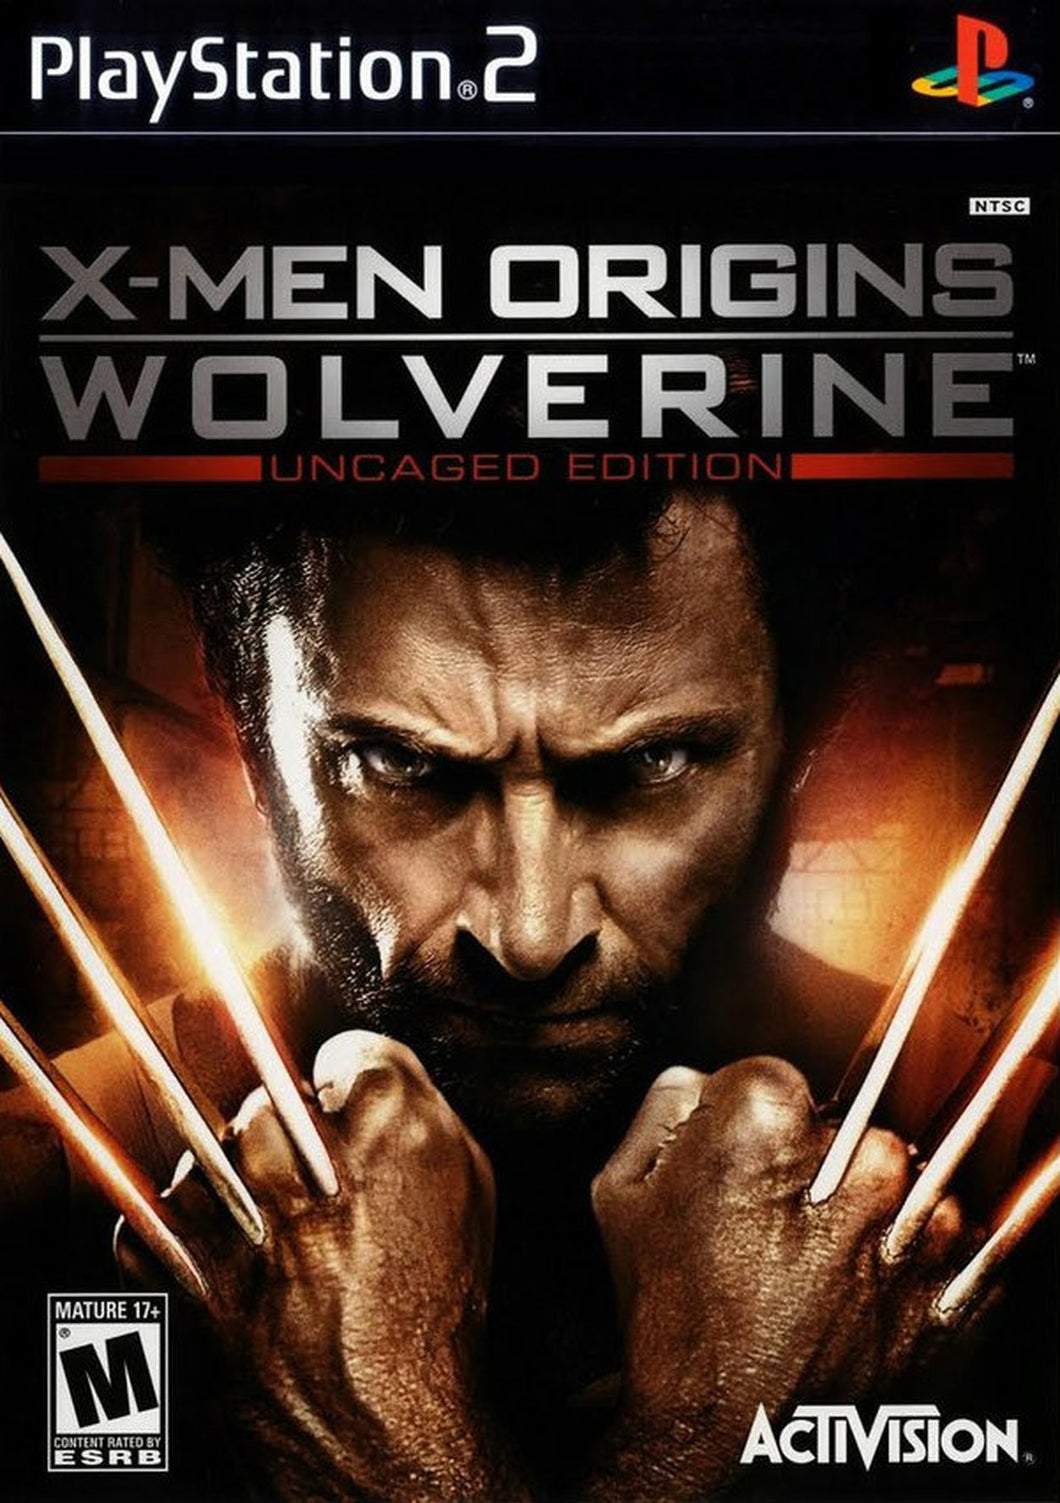 X-Men Origins Wolverine - PS2